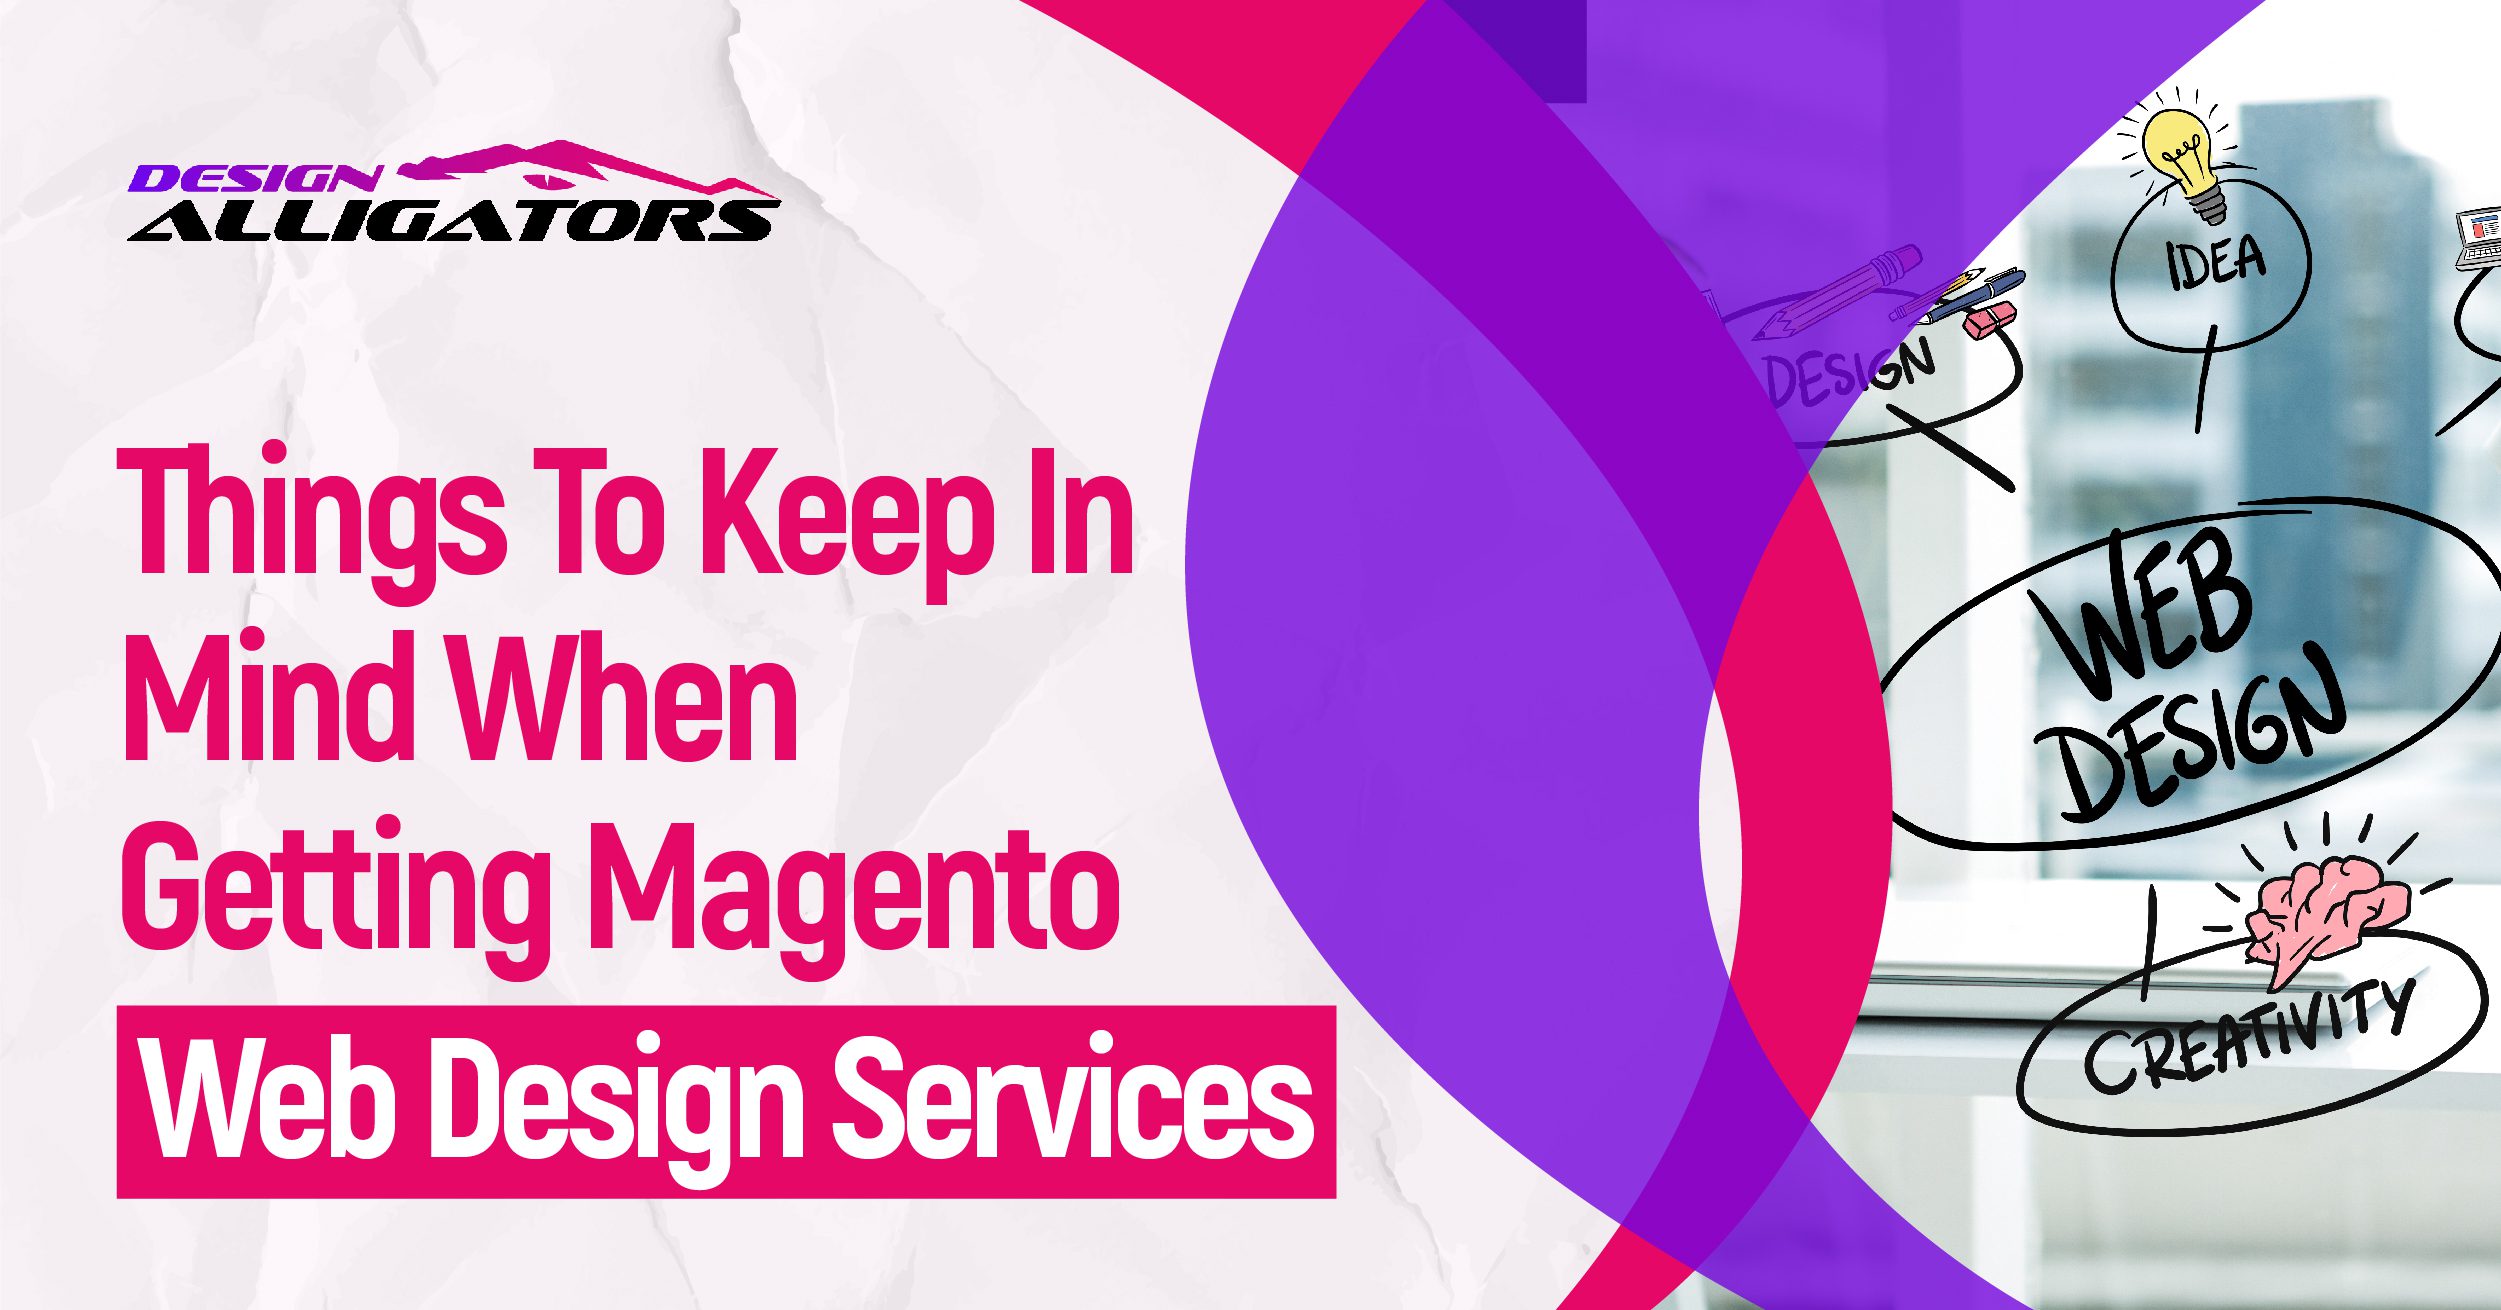 Magento Web Design Services